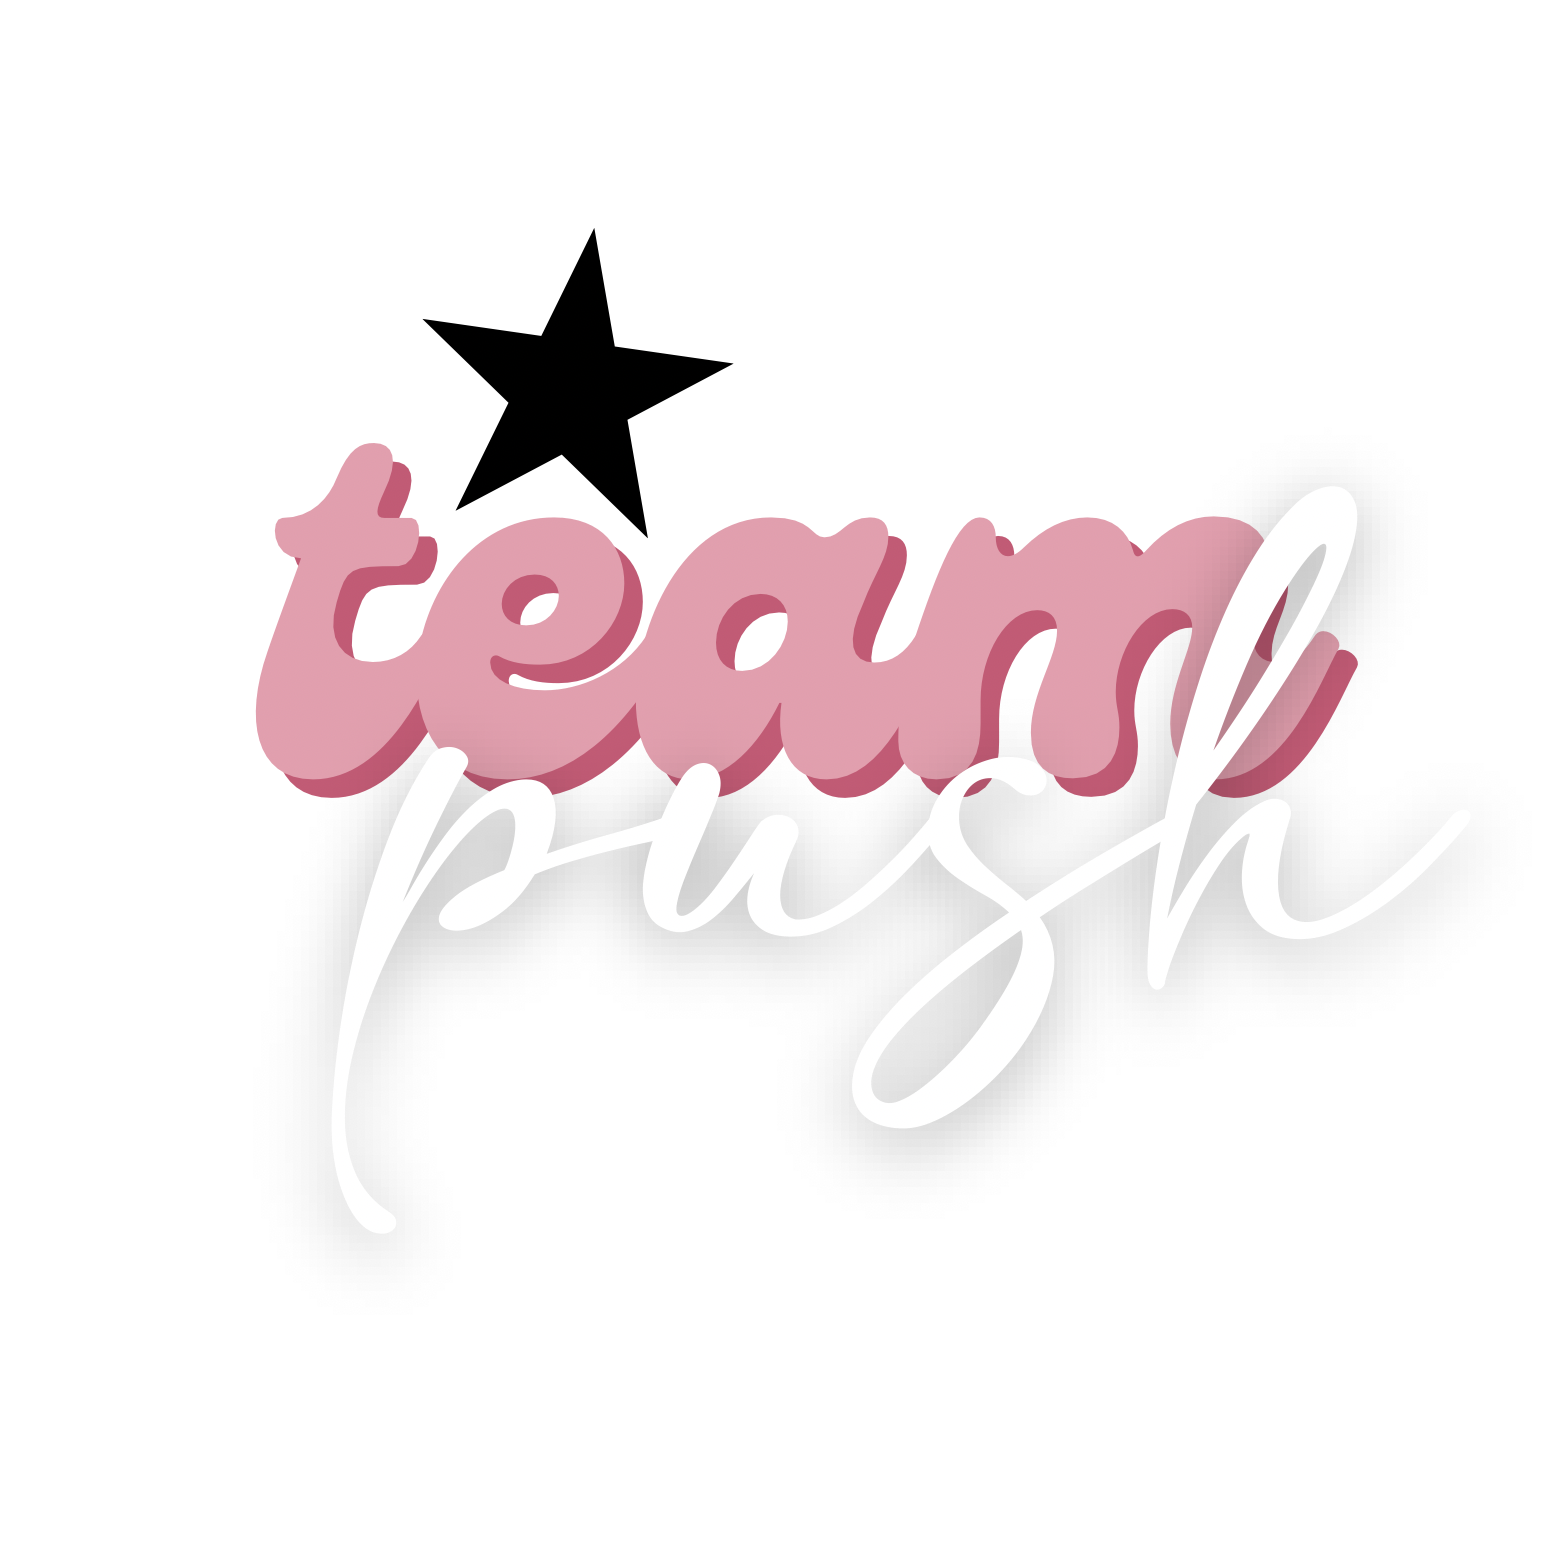 Team Push Die Cut Stickers